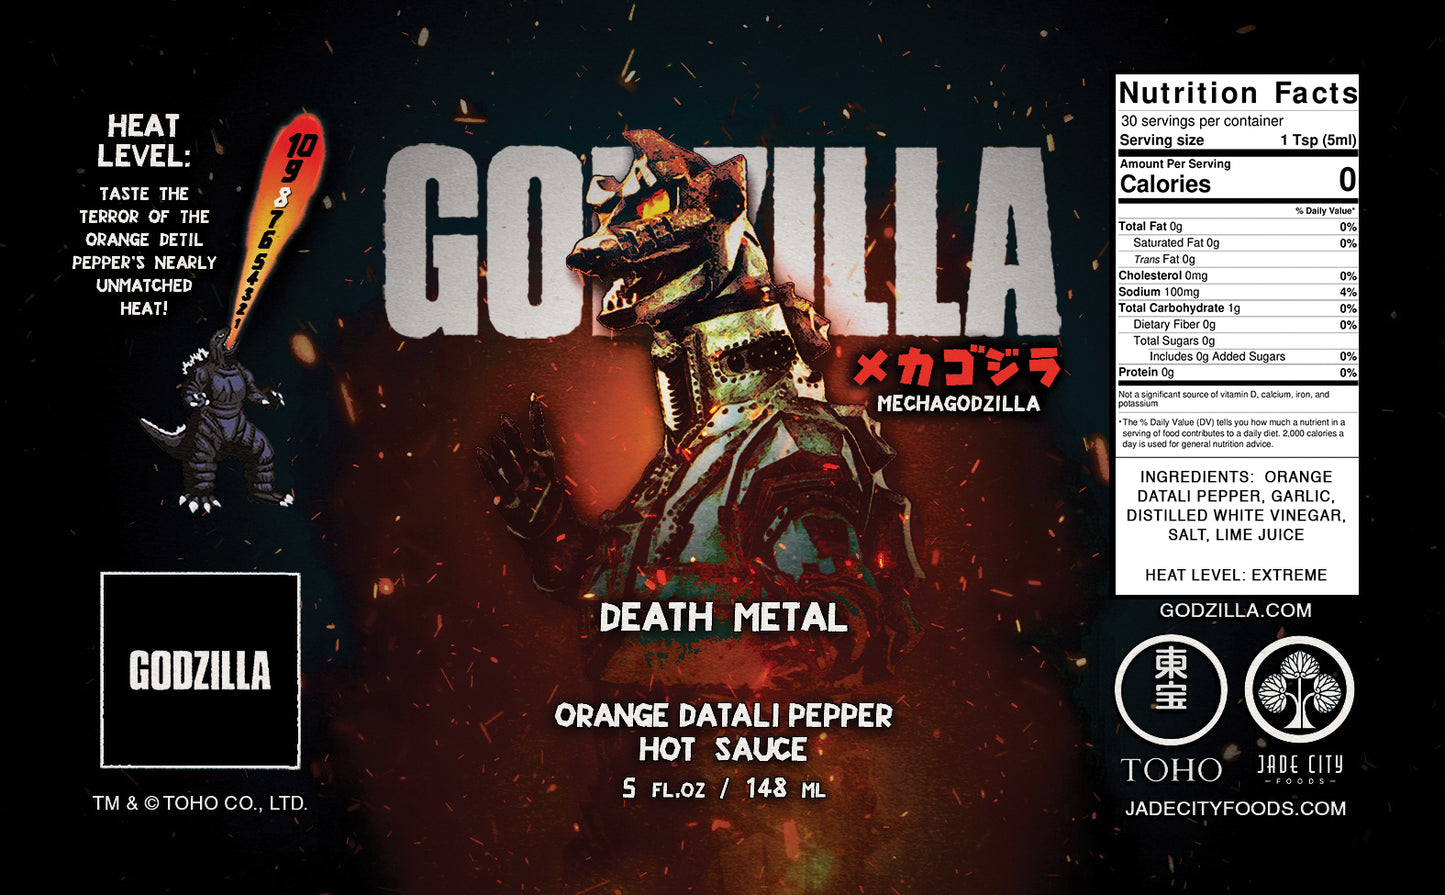 Mechagodzilla's Death Metal: Orange Datali Pepper Hot Sauce